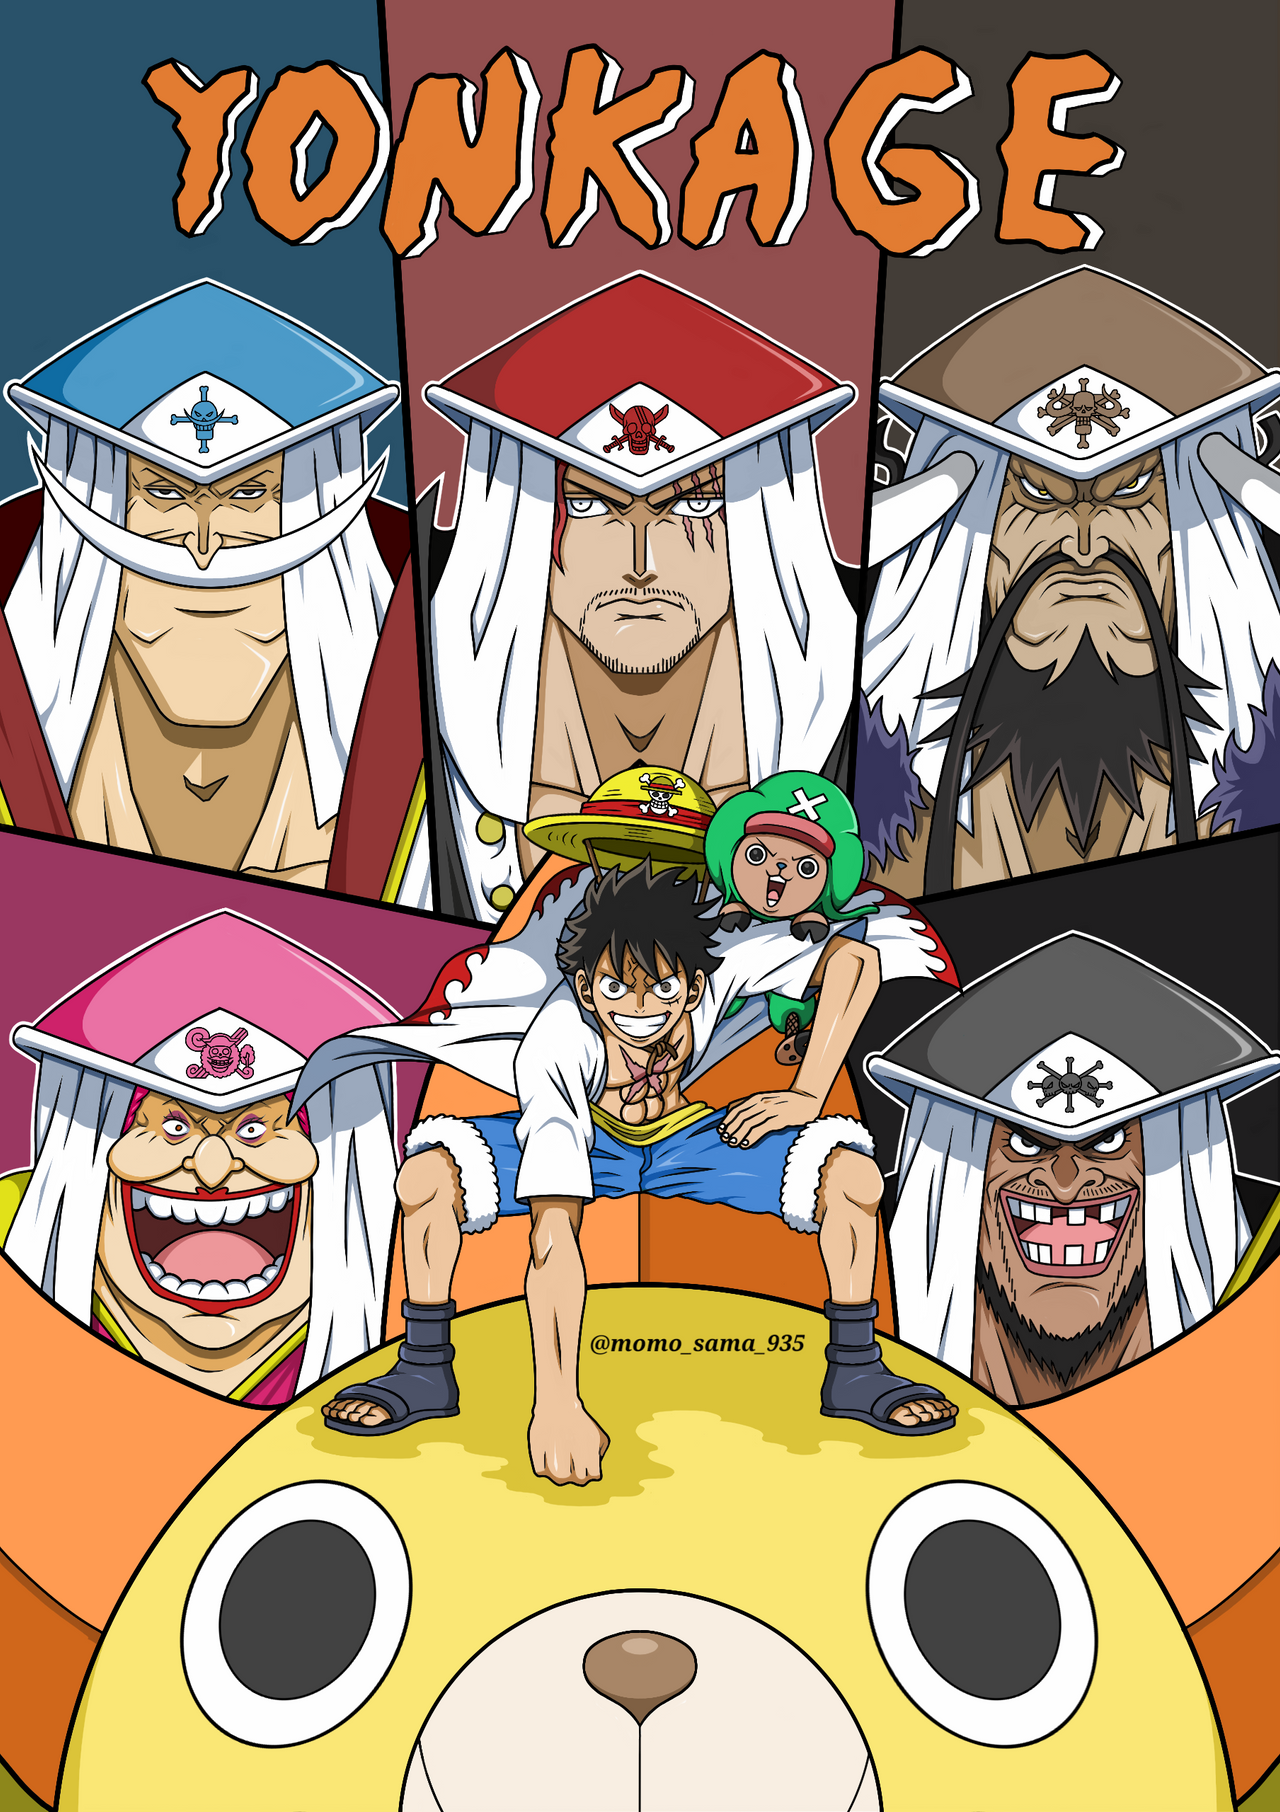 One Piece X Naruto Shippuden by LRowling on DeviantArt